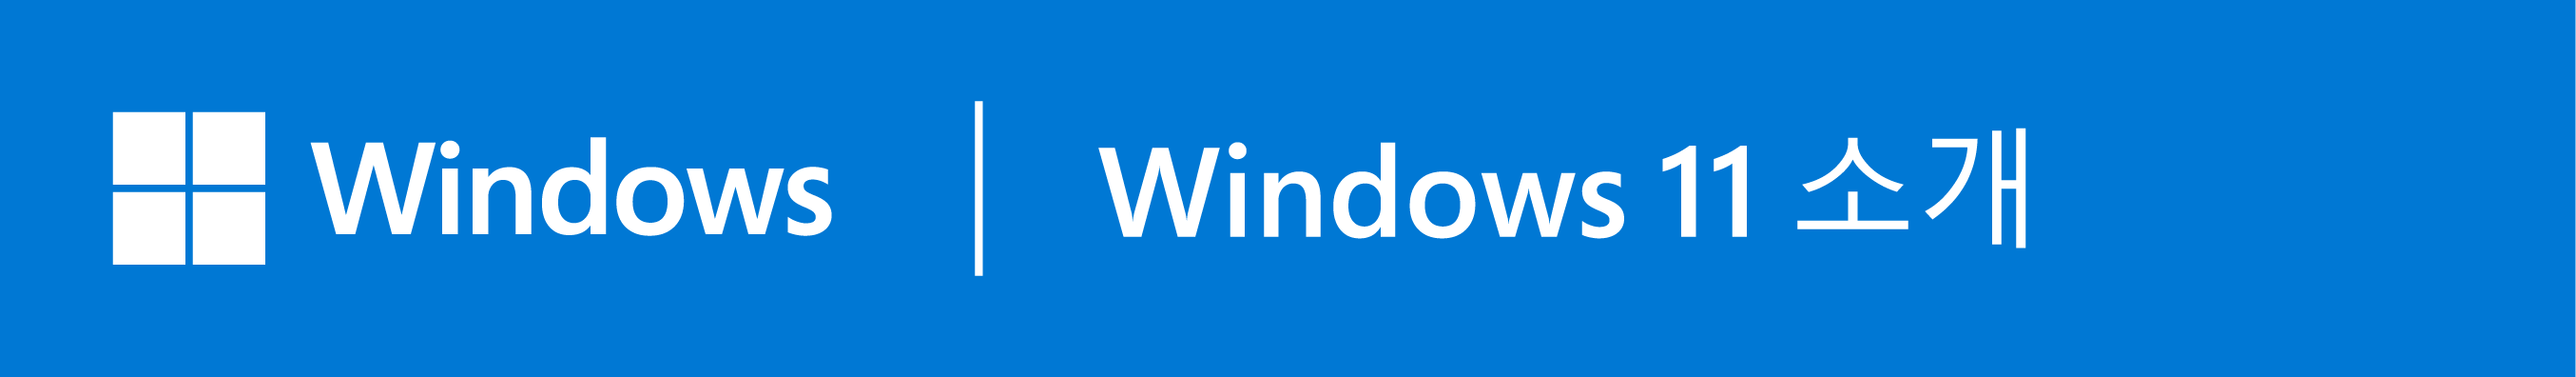 ASUS 은 비즈니스용 Windows 11 Pro 사용을 권장합니다.